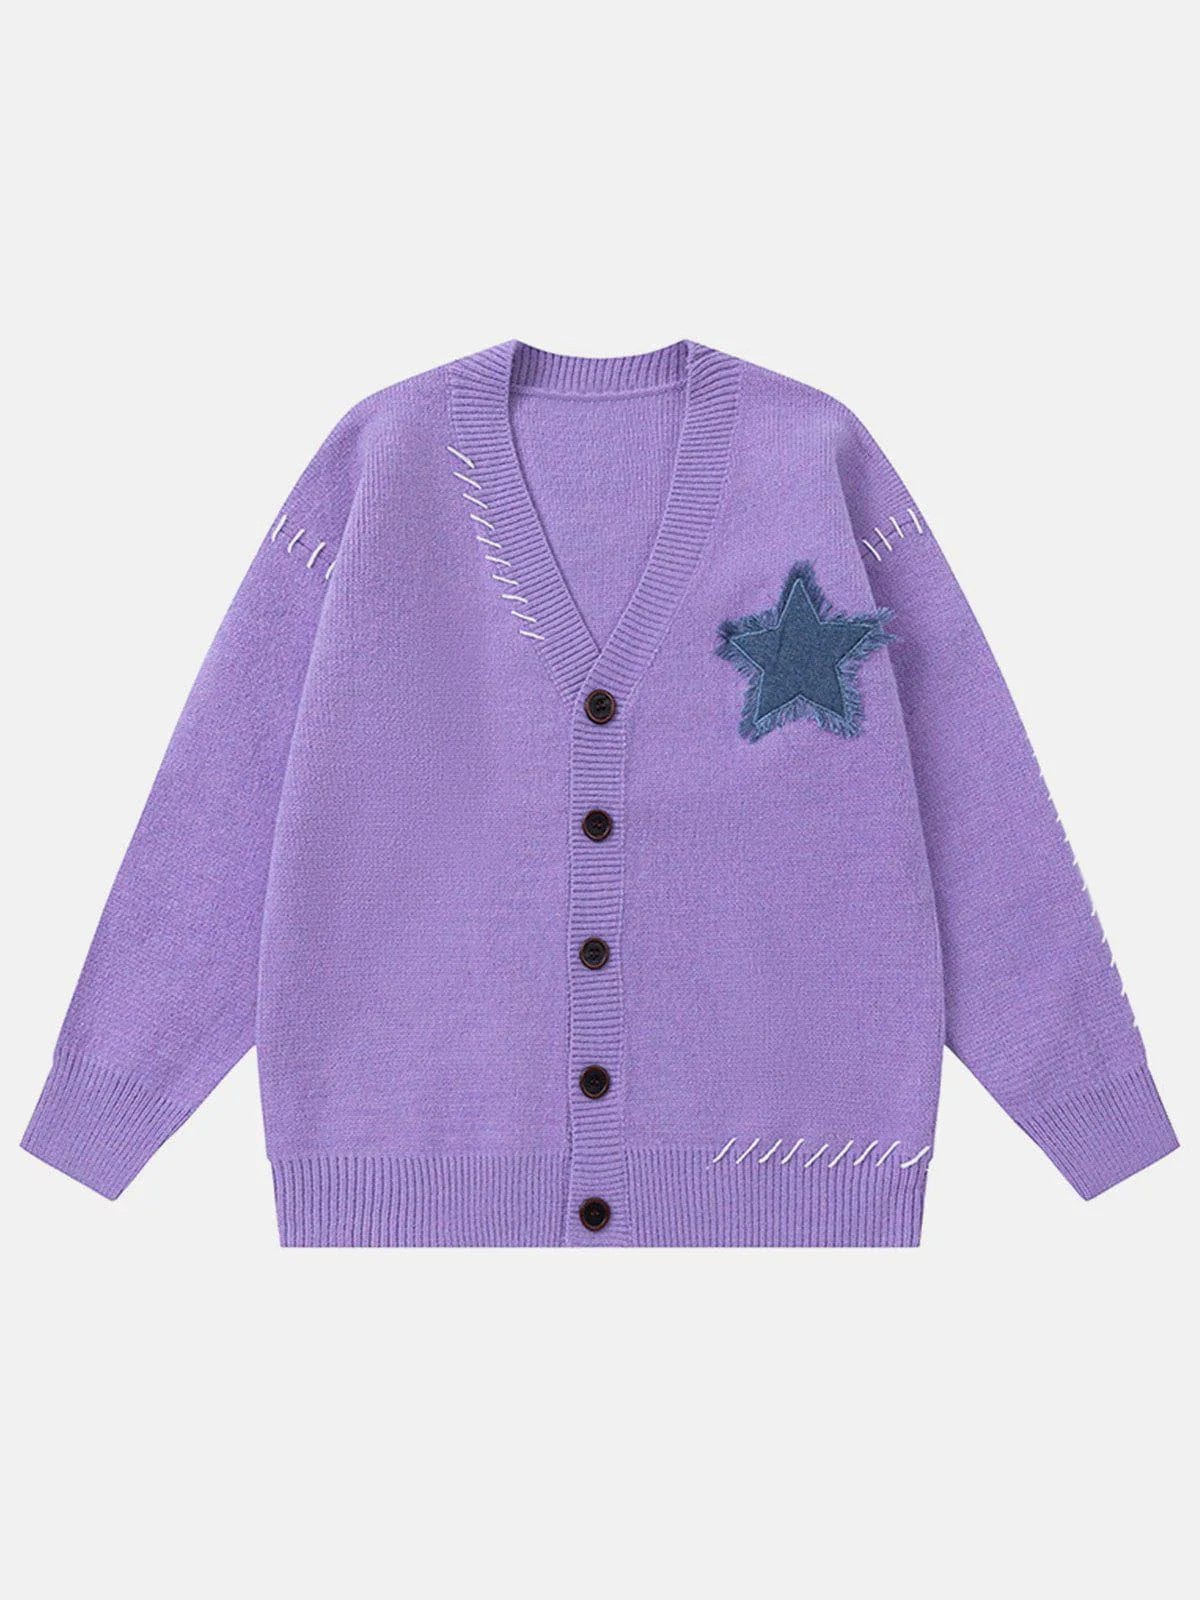 Star Applique Crochet Cardigan